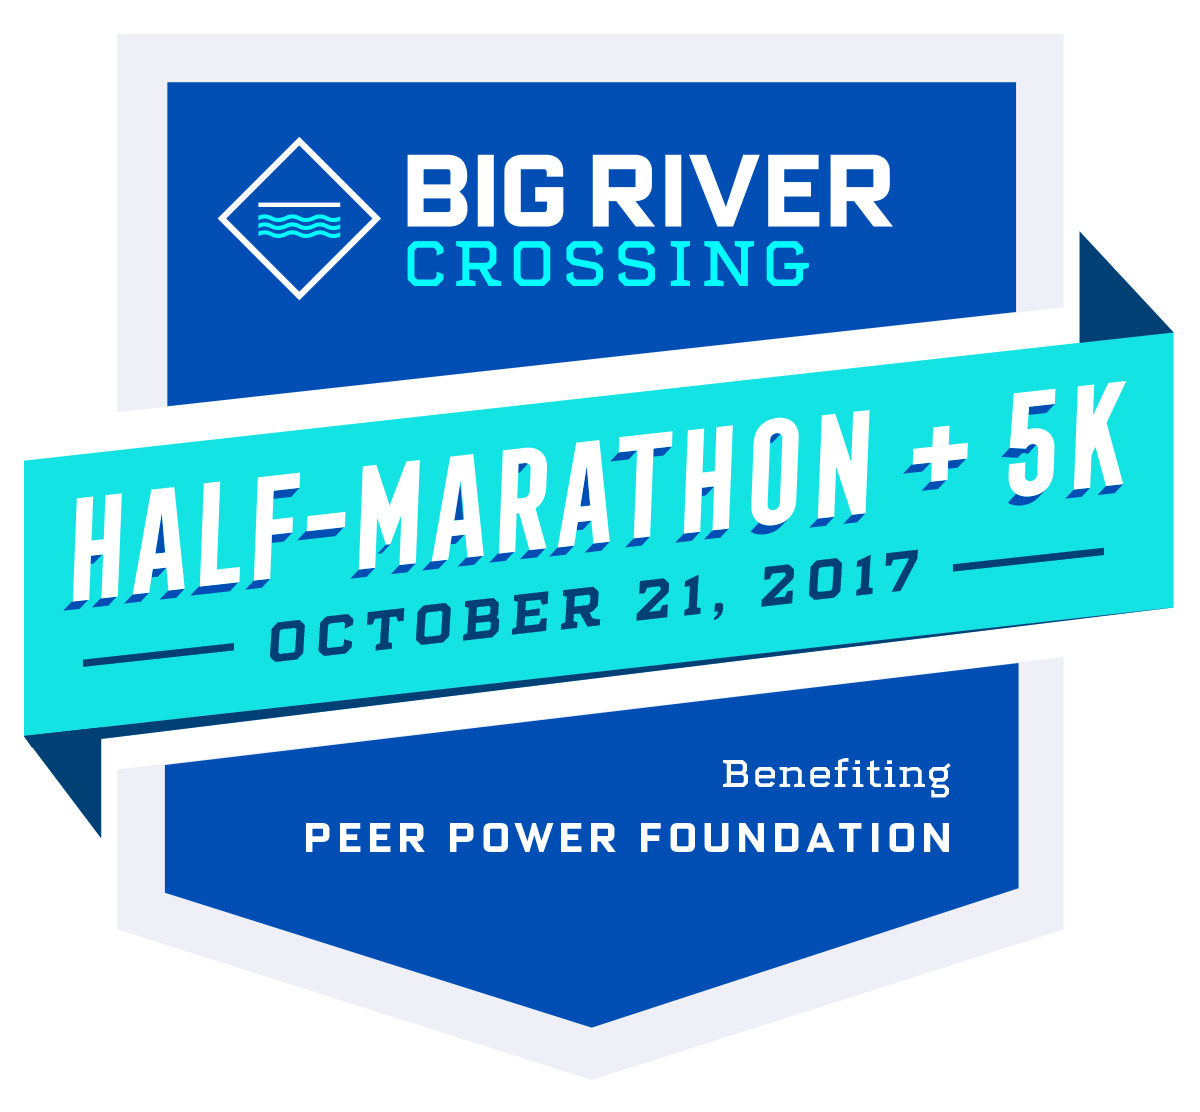 Big River Crossing Half Marathon + 5K benefiting Peer Power Foundation